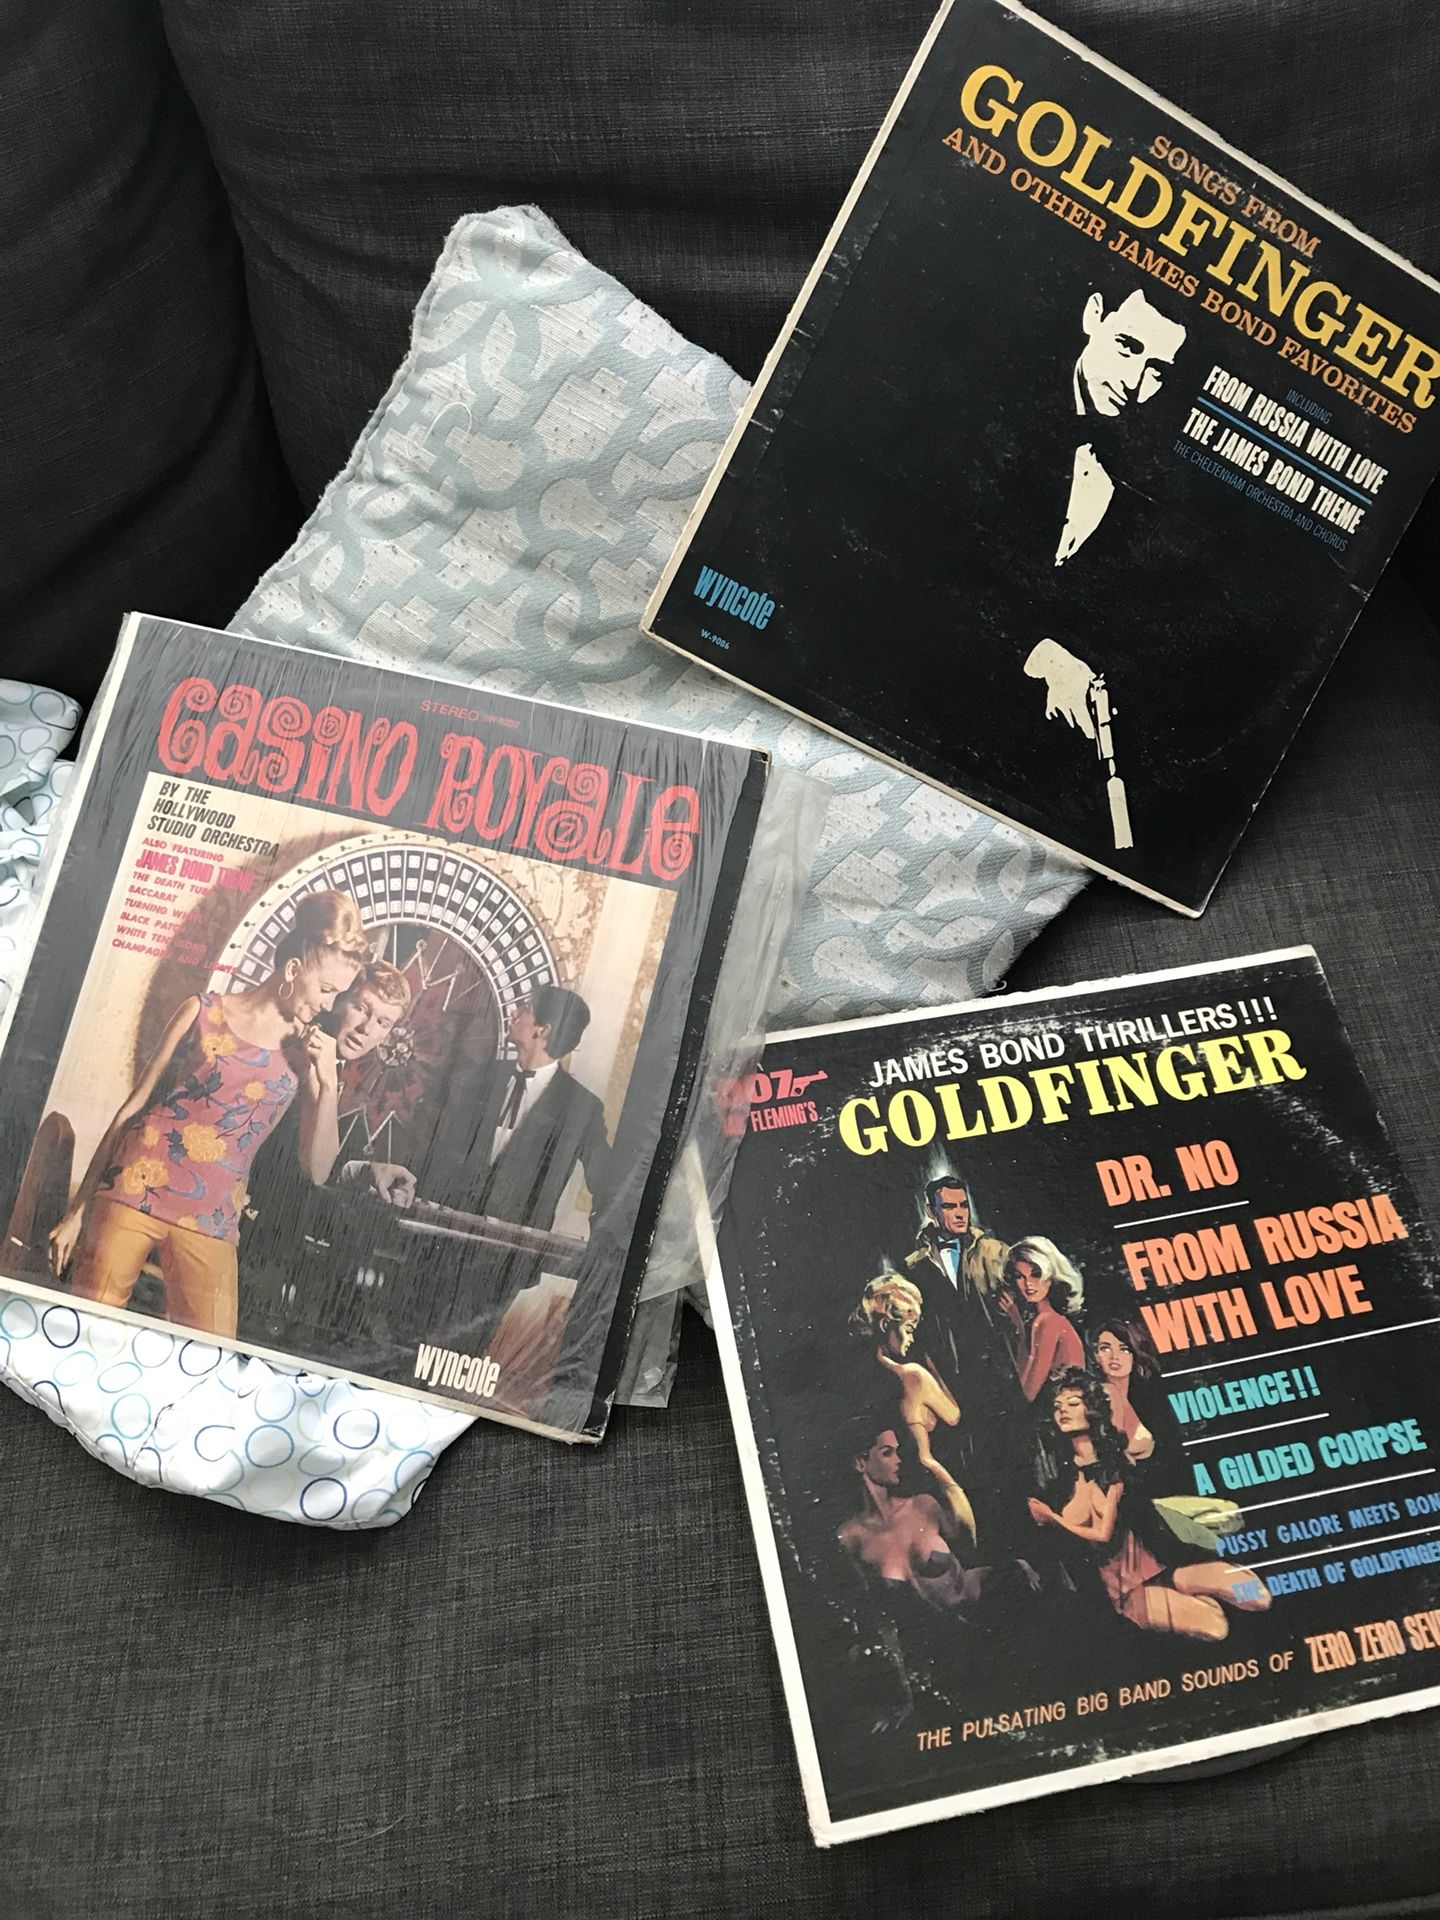 James Bond soundtracks (vinyl records)